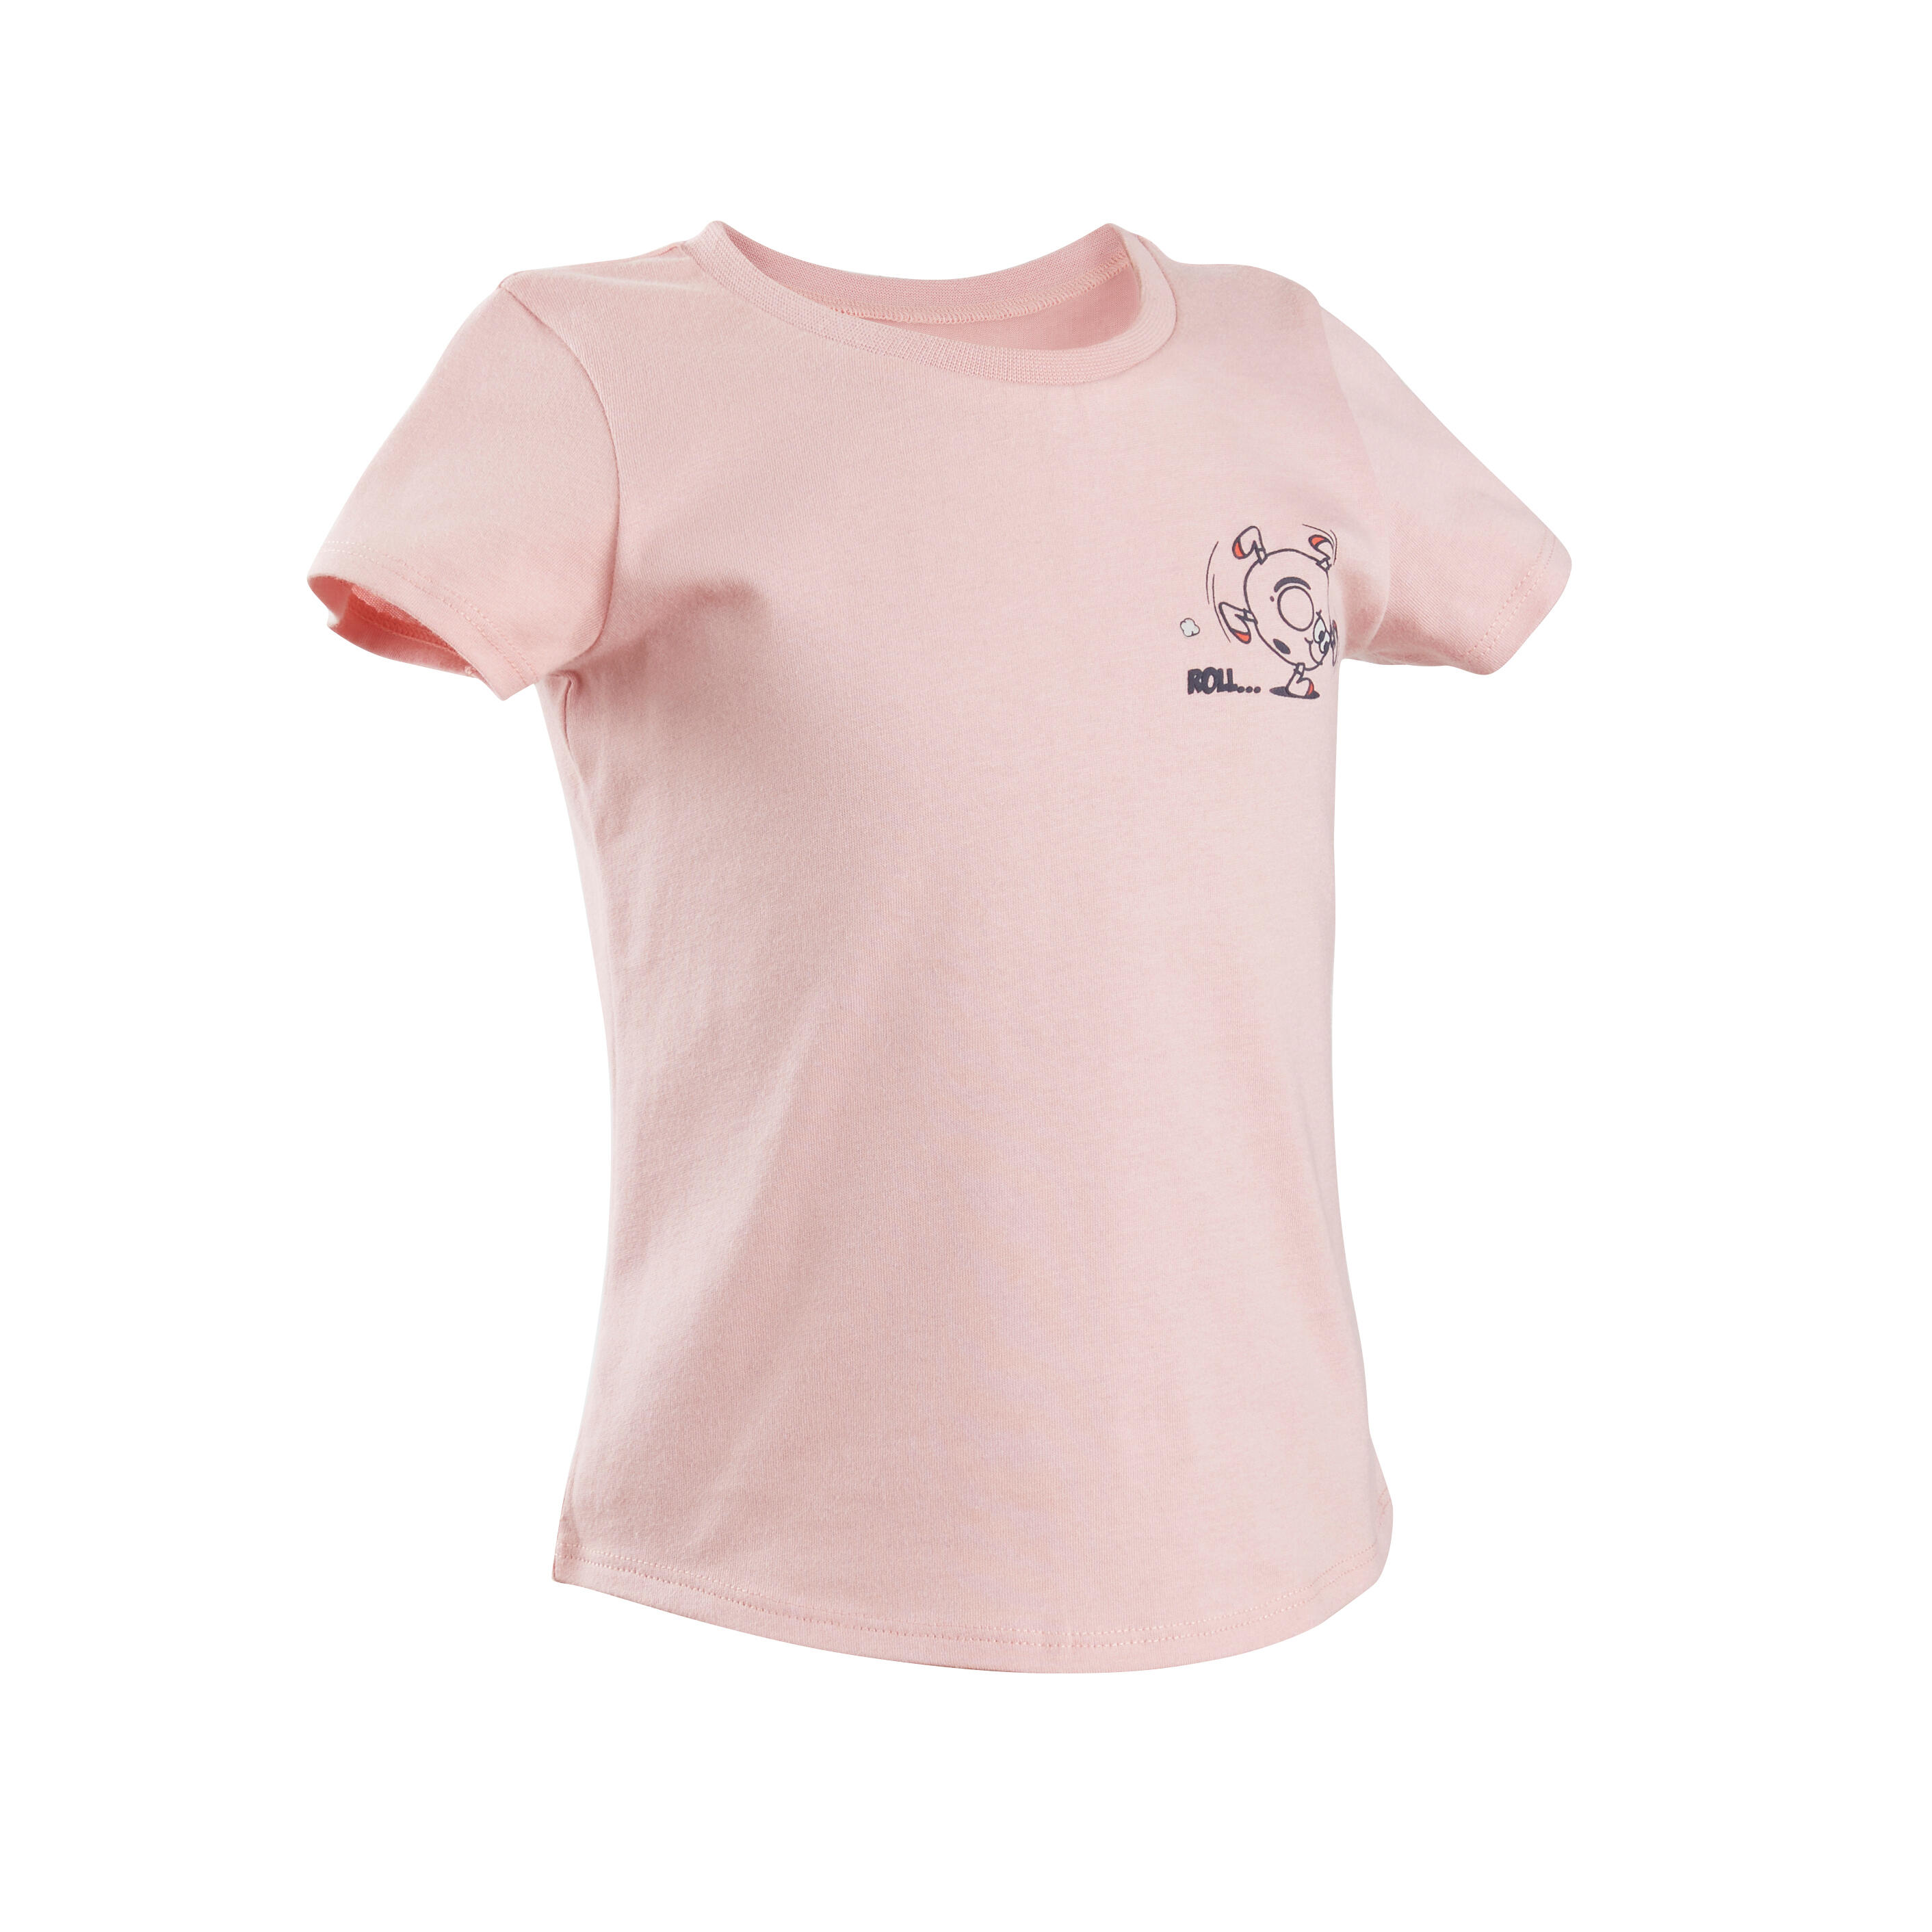 DOMYOS Baby Cotton T-Shirt Basic - Pink